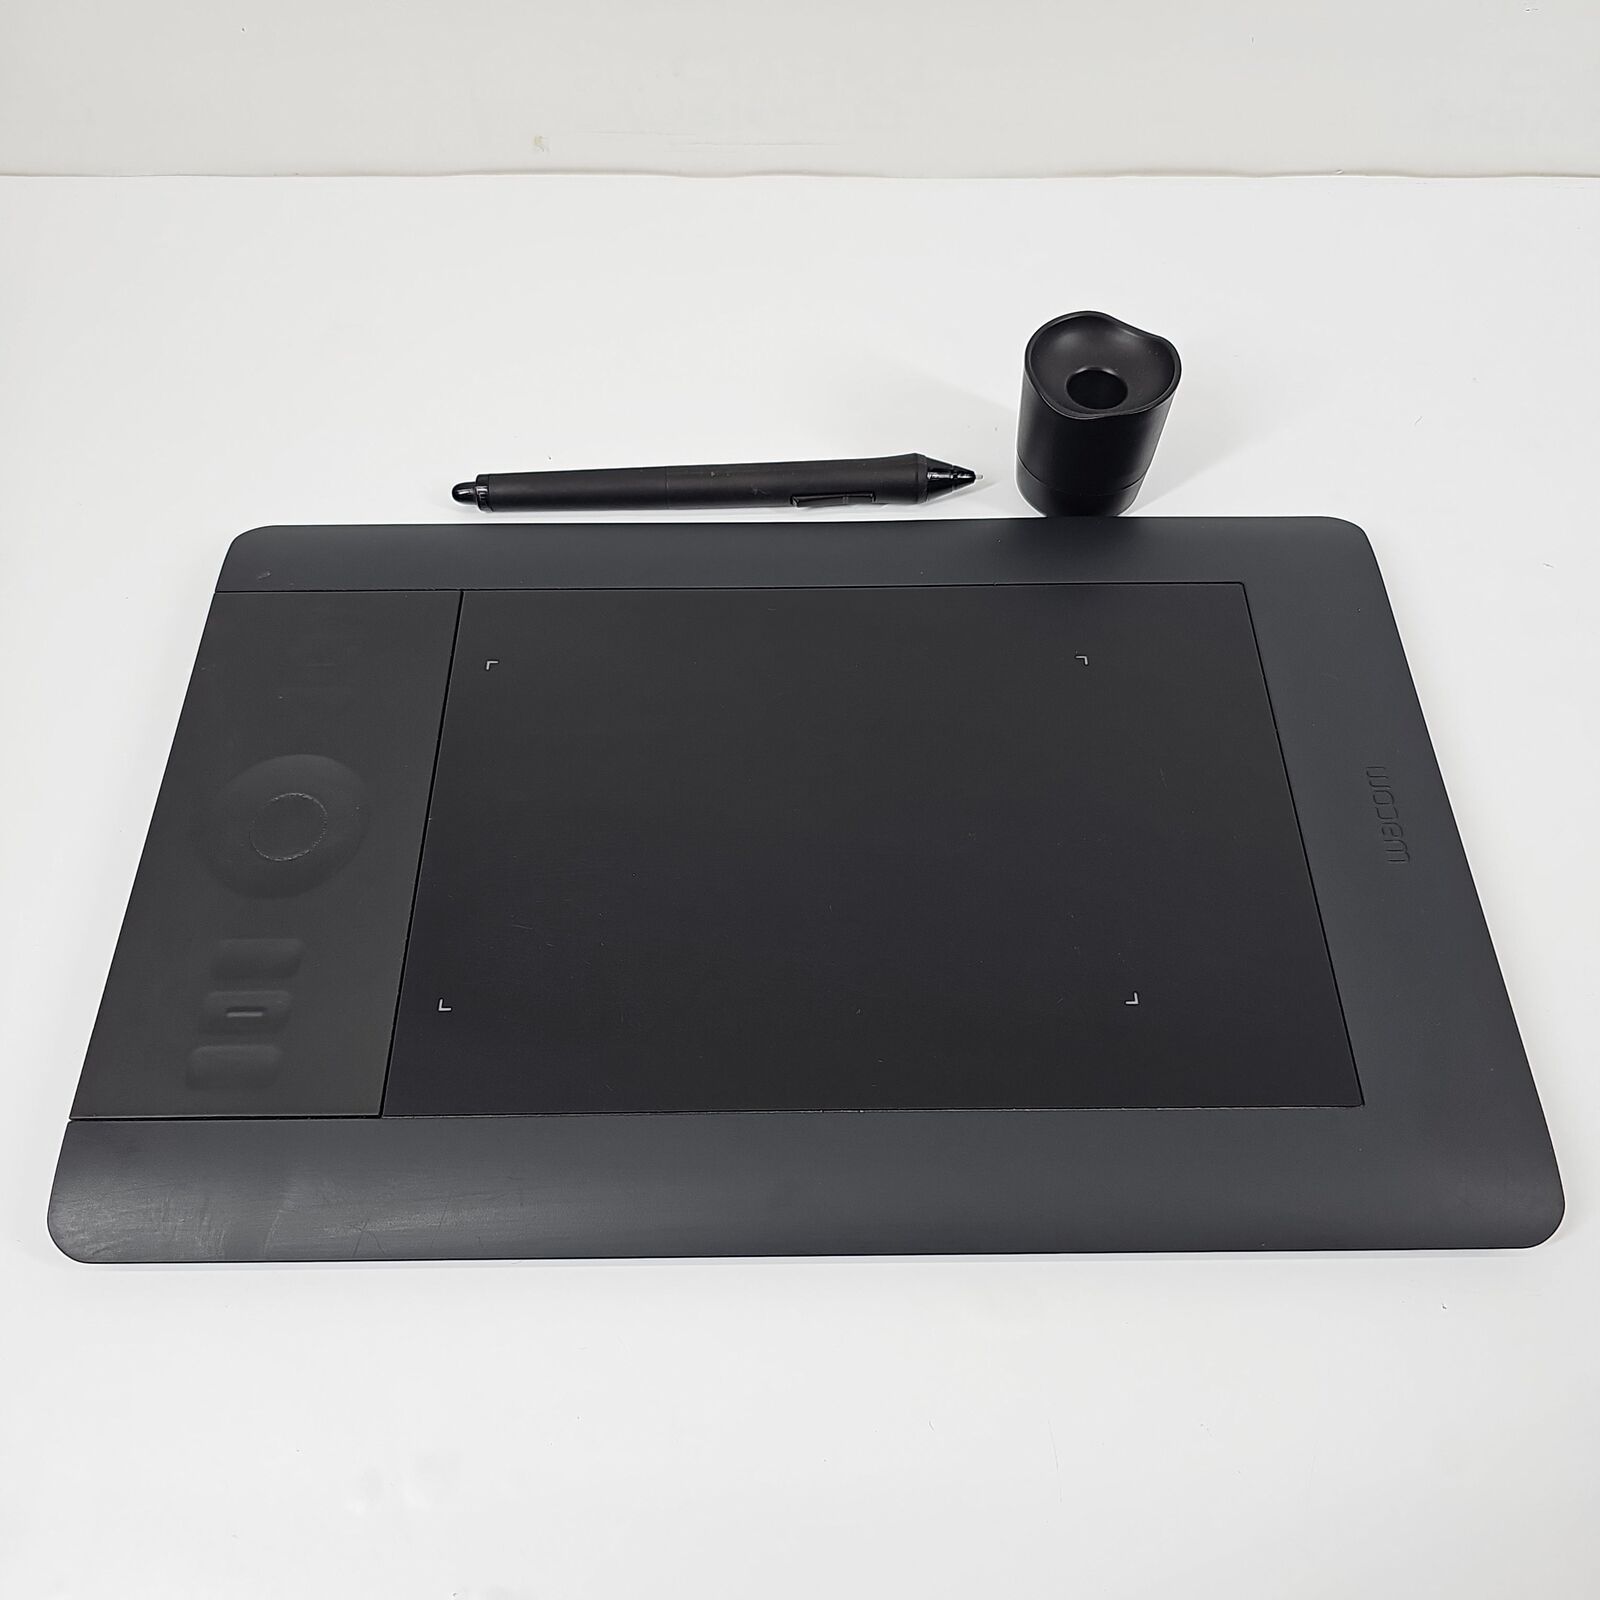 Wacom Intuos5 Touch Small Pen Tablet Black PTH-450